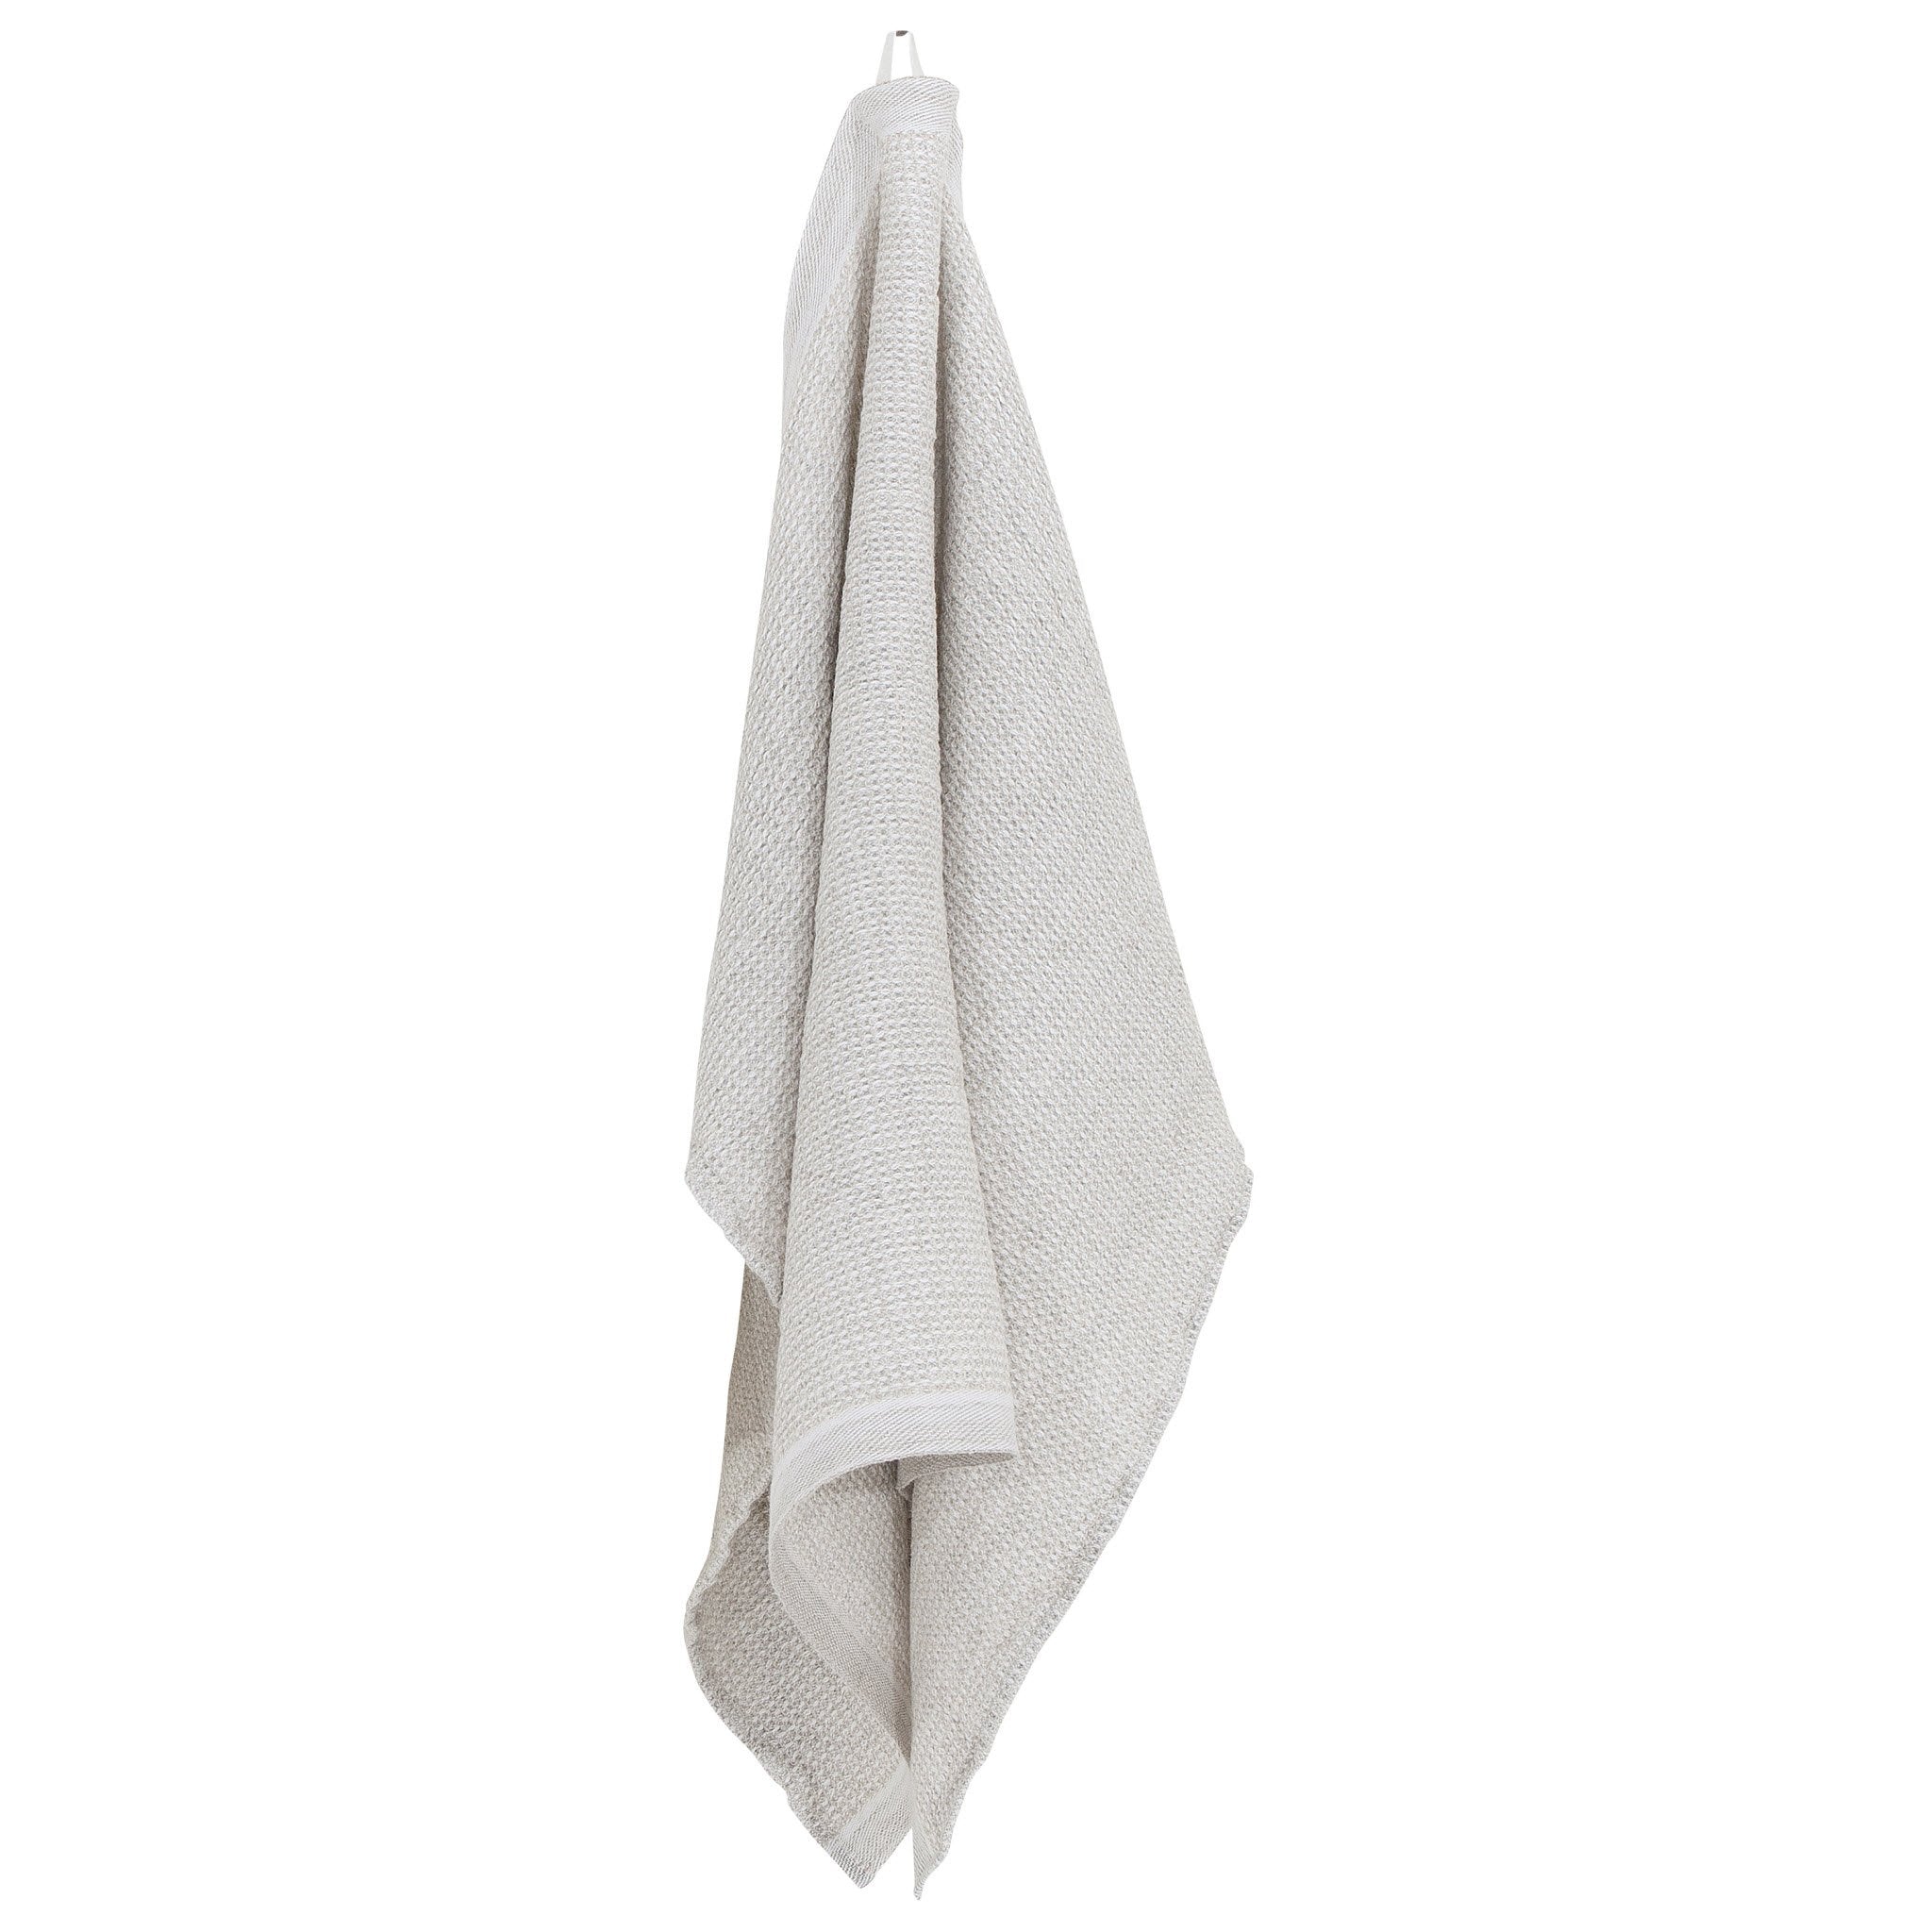 Body Towel Saimaannorppa Quick Dry Towels Lapuan Kankurit Bath Linen - White  Motive